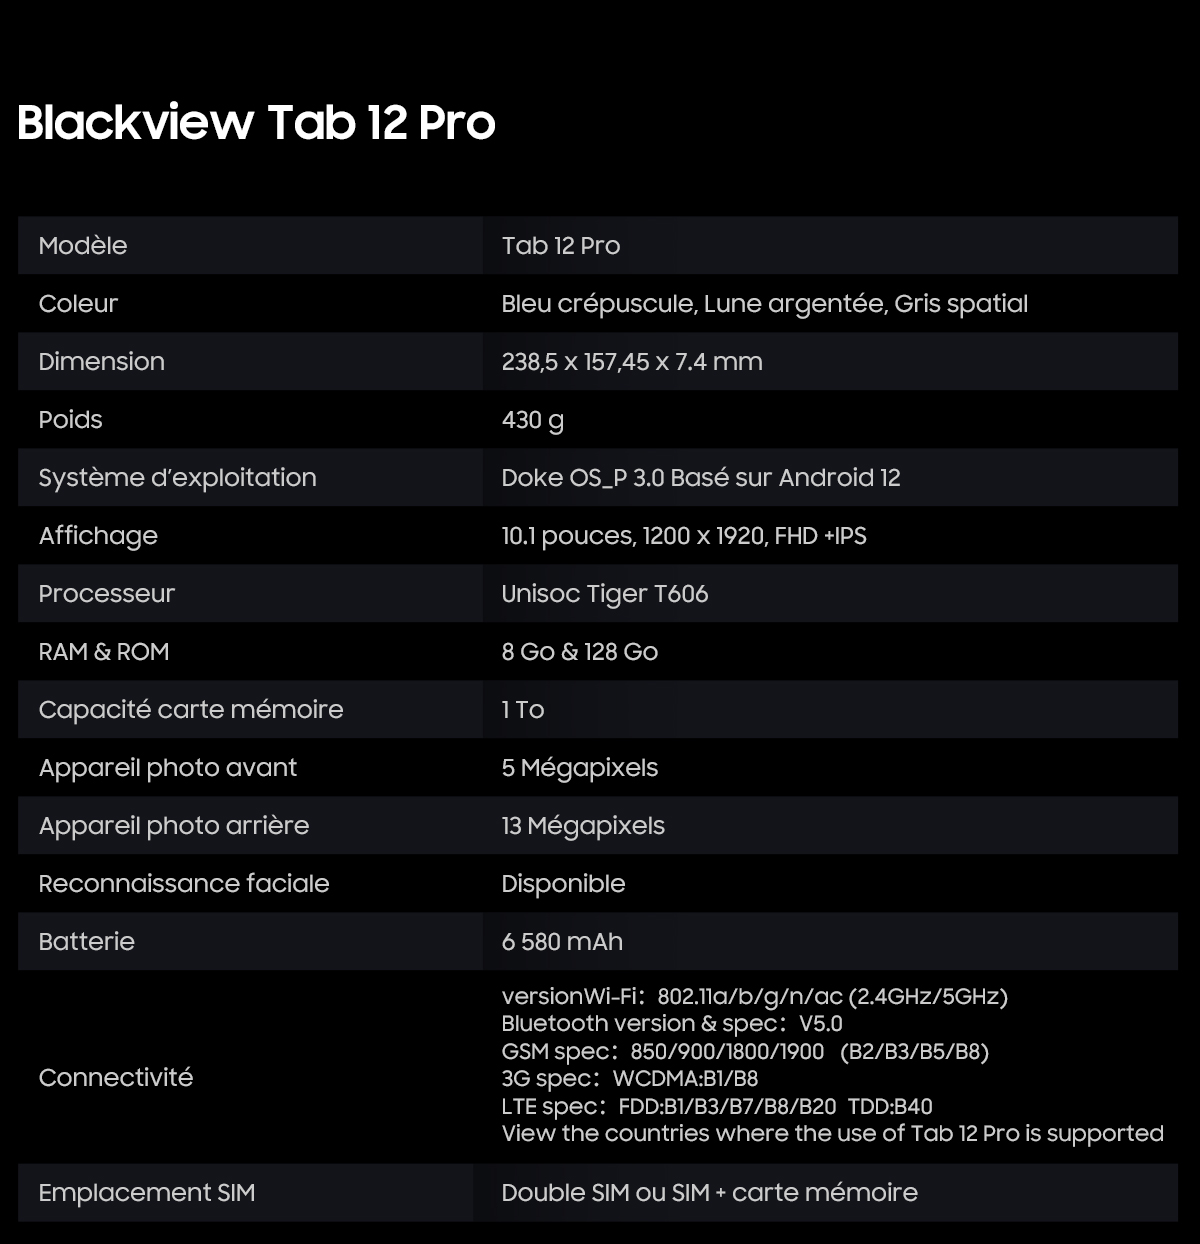 Tablette Tactile 10 Pouces Blackview Tab 12 Pro Android 12 Tablette  14Go+128Go/TF 1To,6580mAh Tablette PC,Dual SIM 4G+5G  WiFi,Octa-Core,13MP+5MP,1920*1200 FHD+,Face ID/PC Mode - Gris - Tablette  tactile - Achat & prix